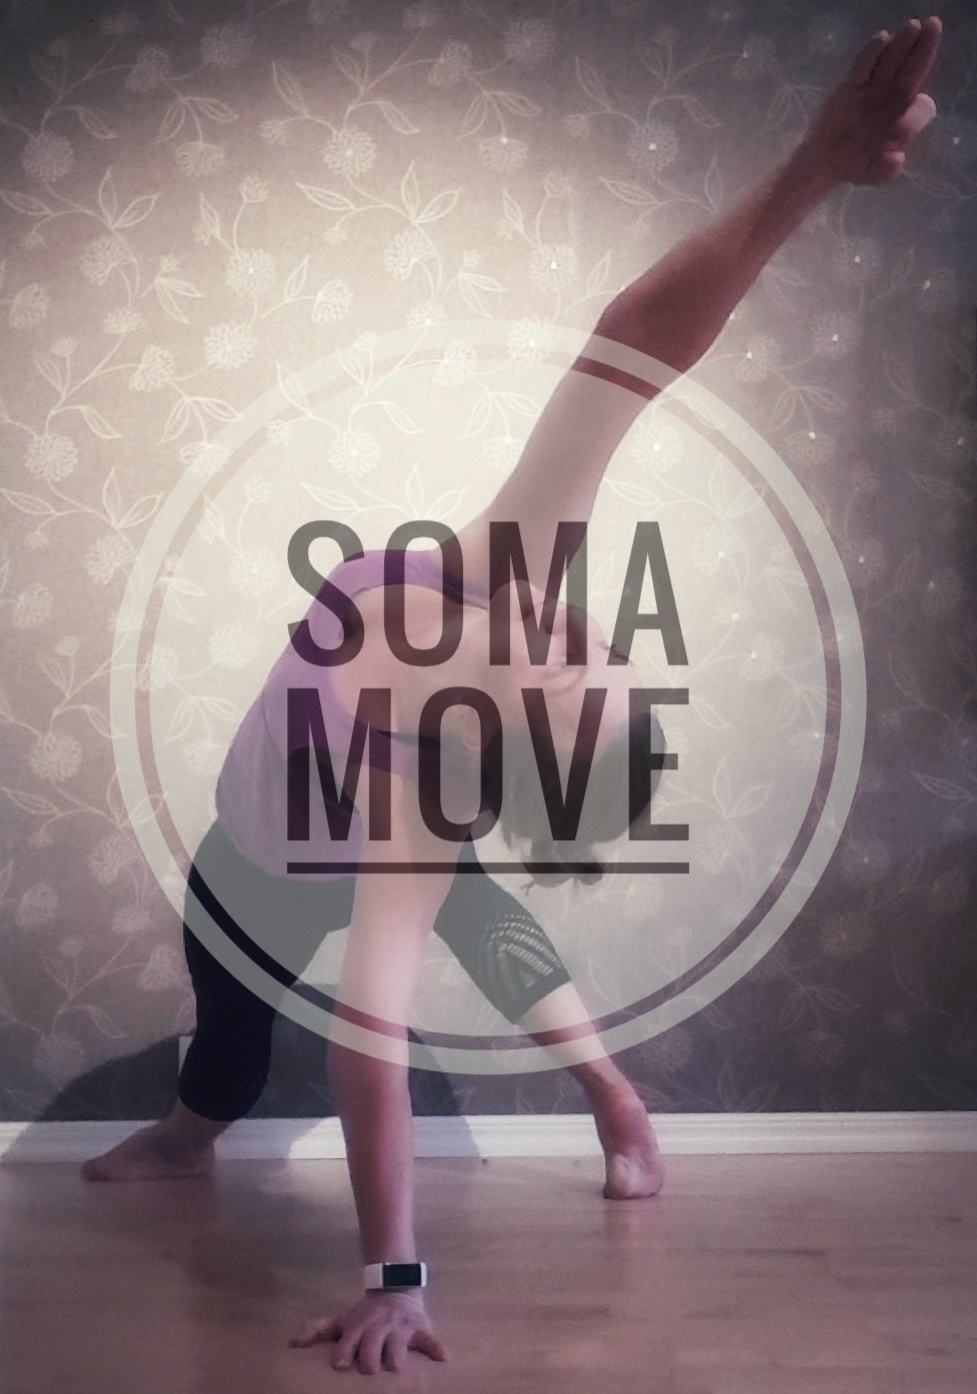 SOMA move